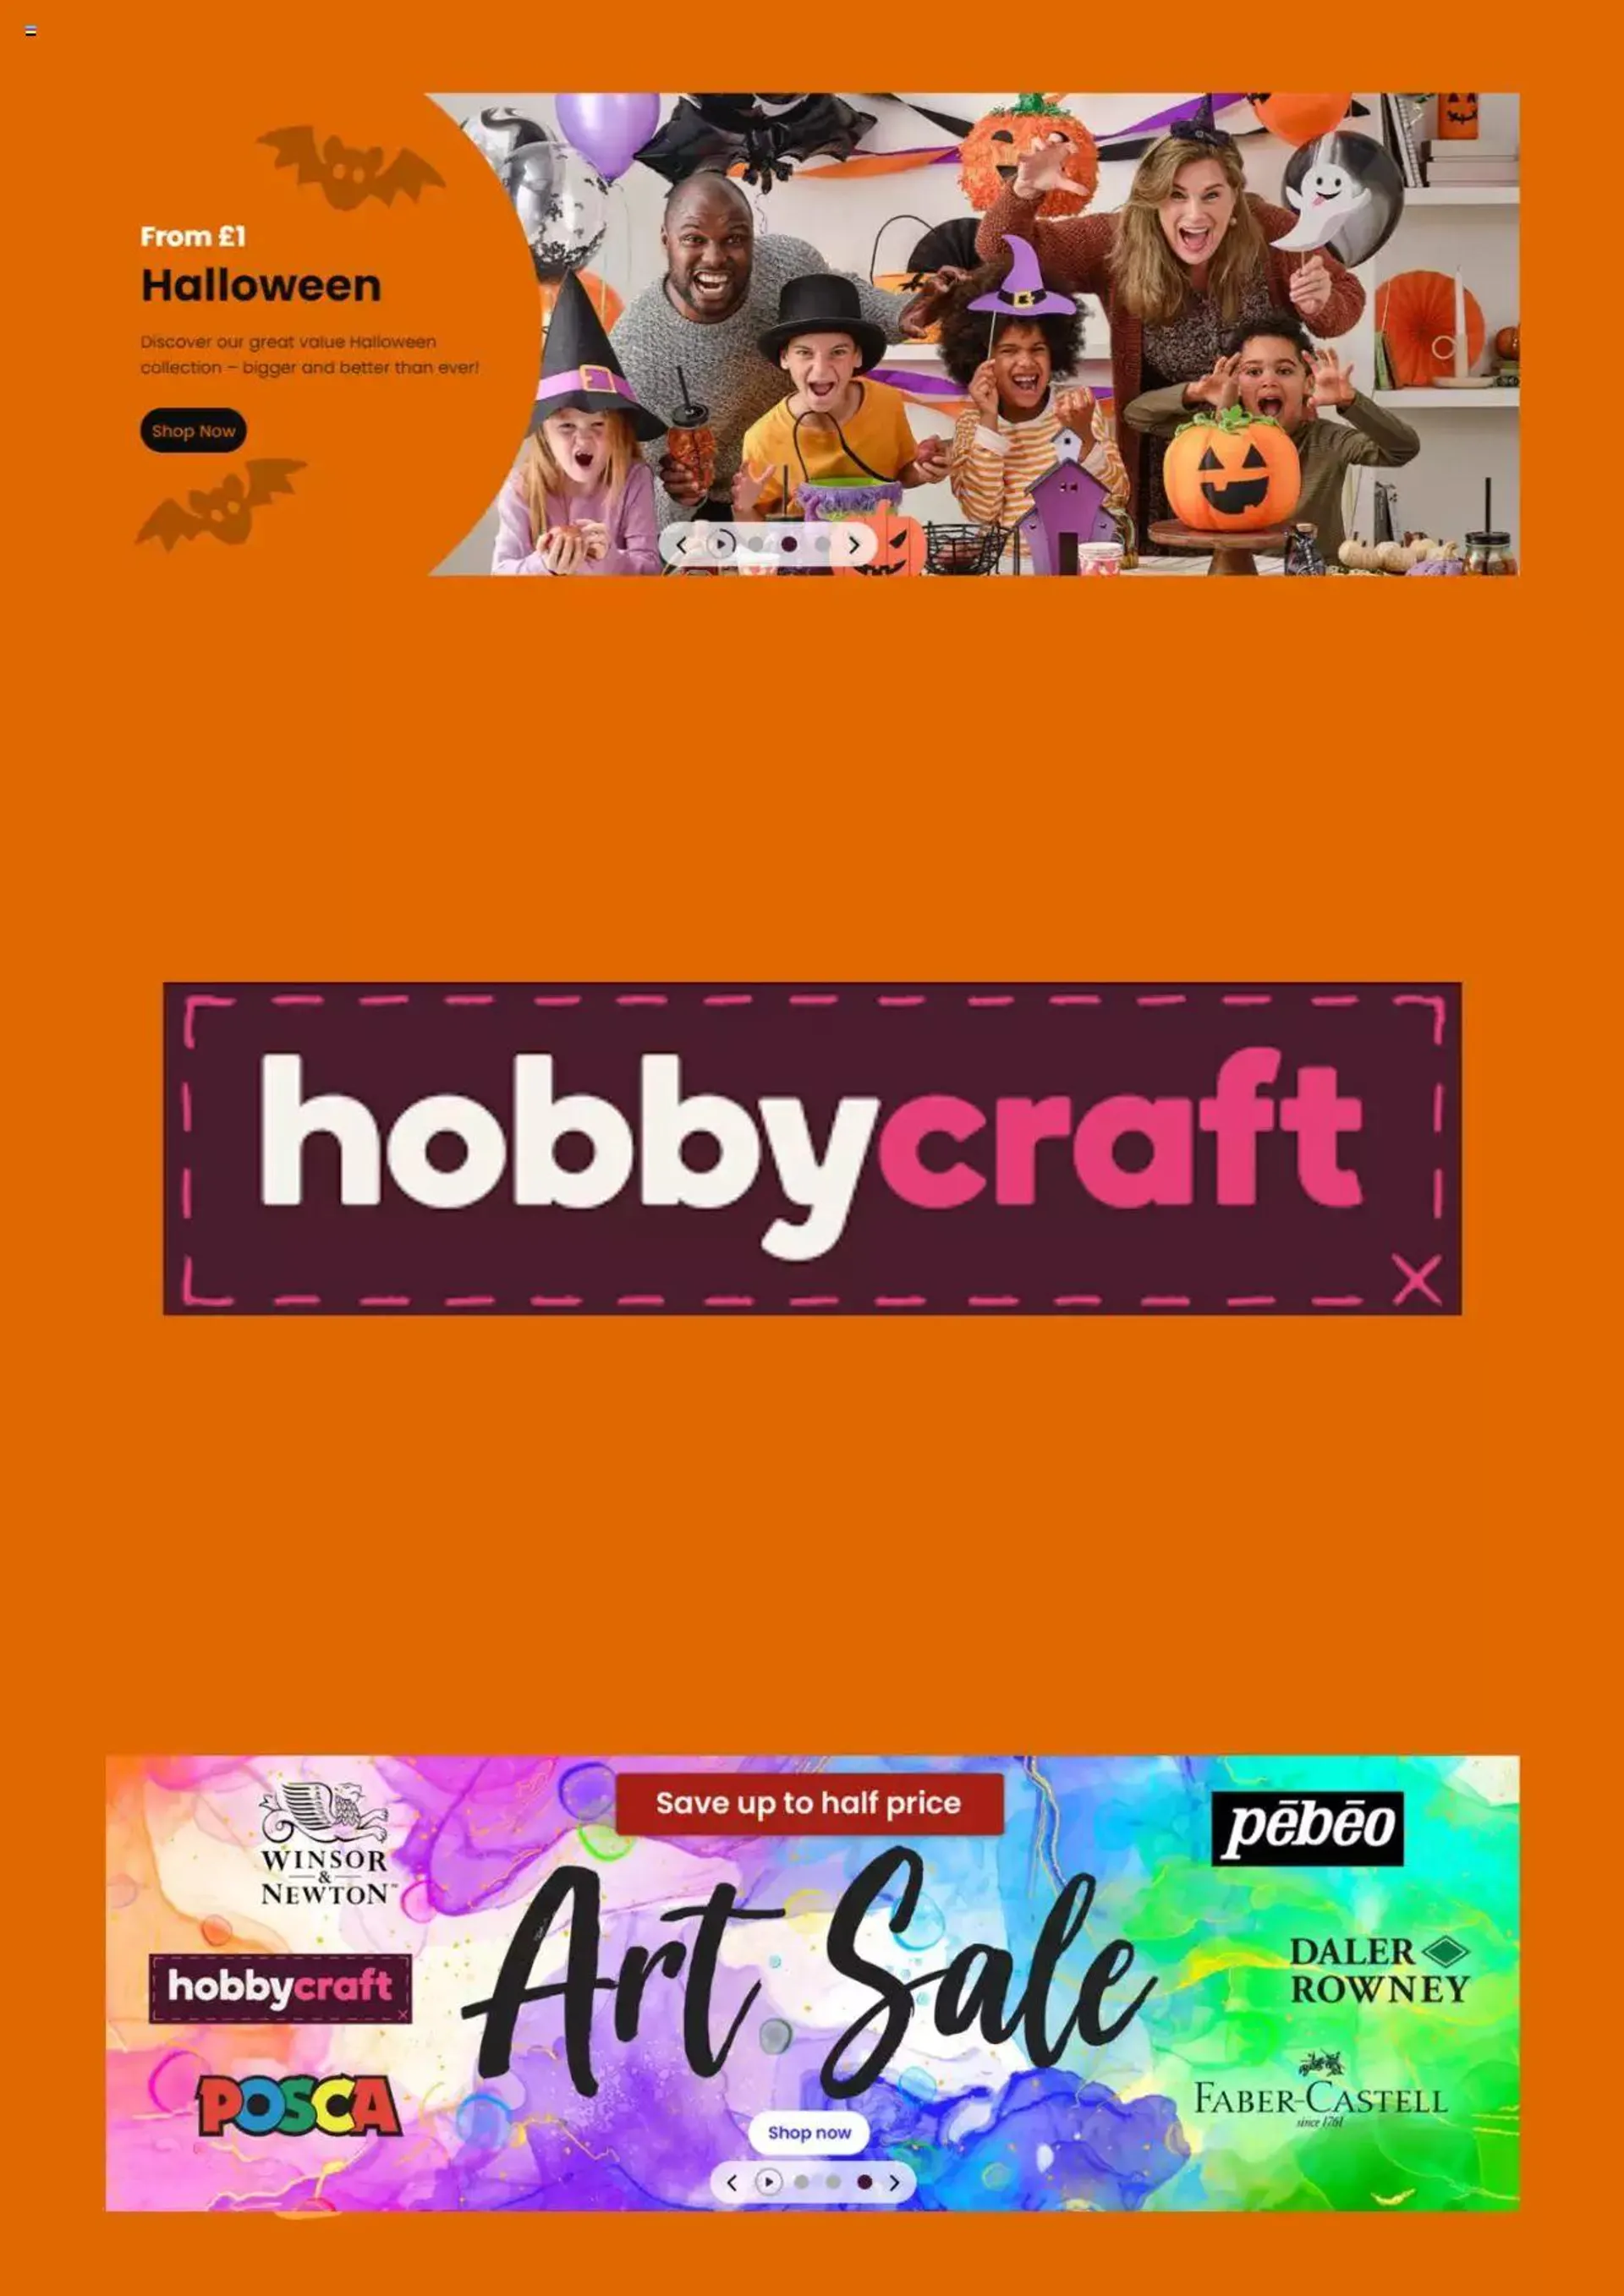 Hobbycraft offers